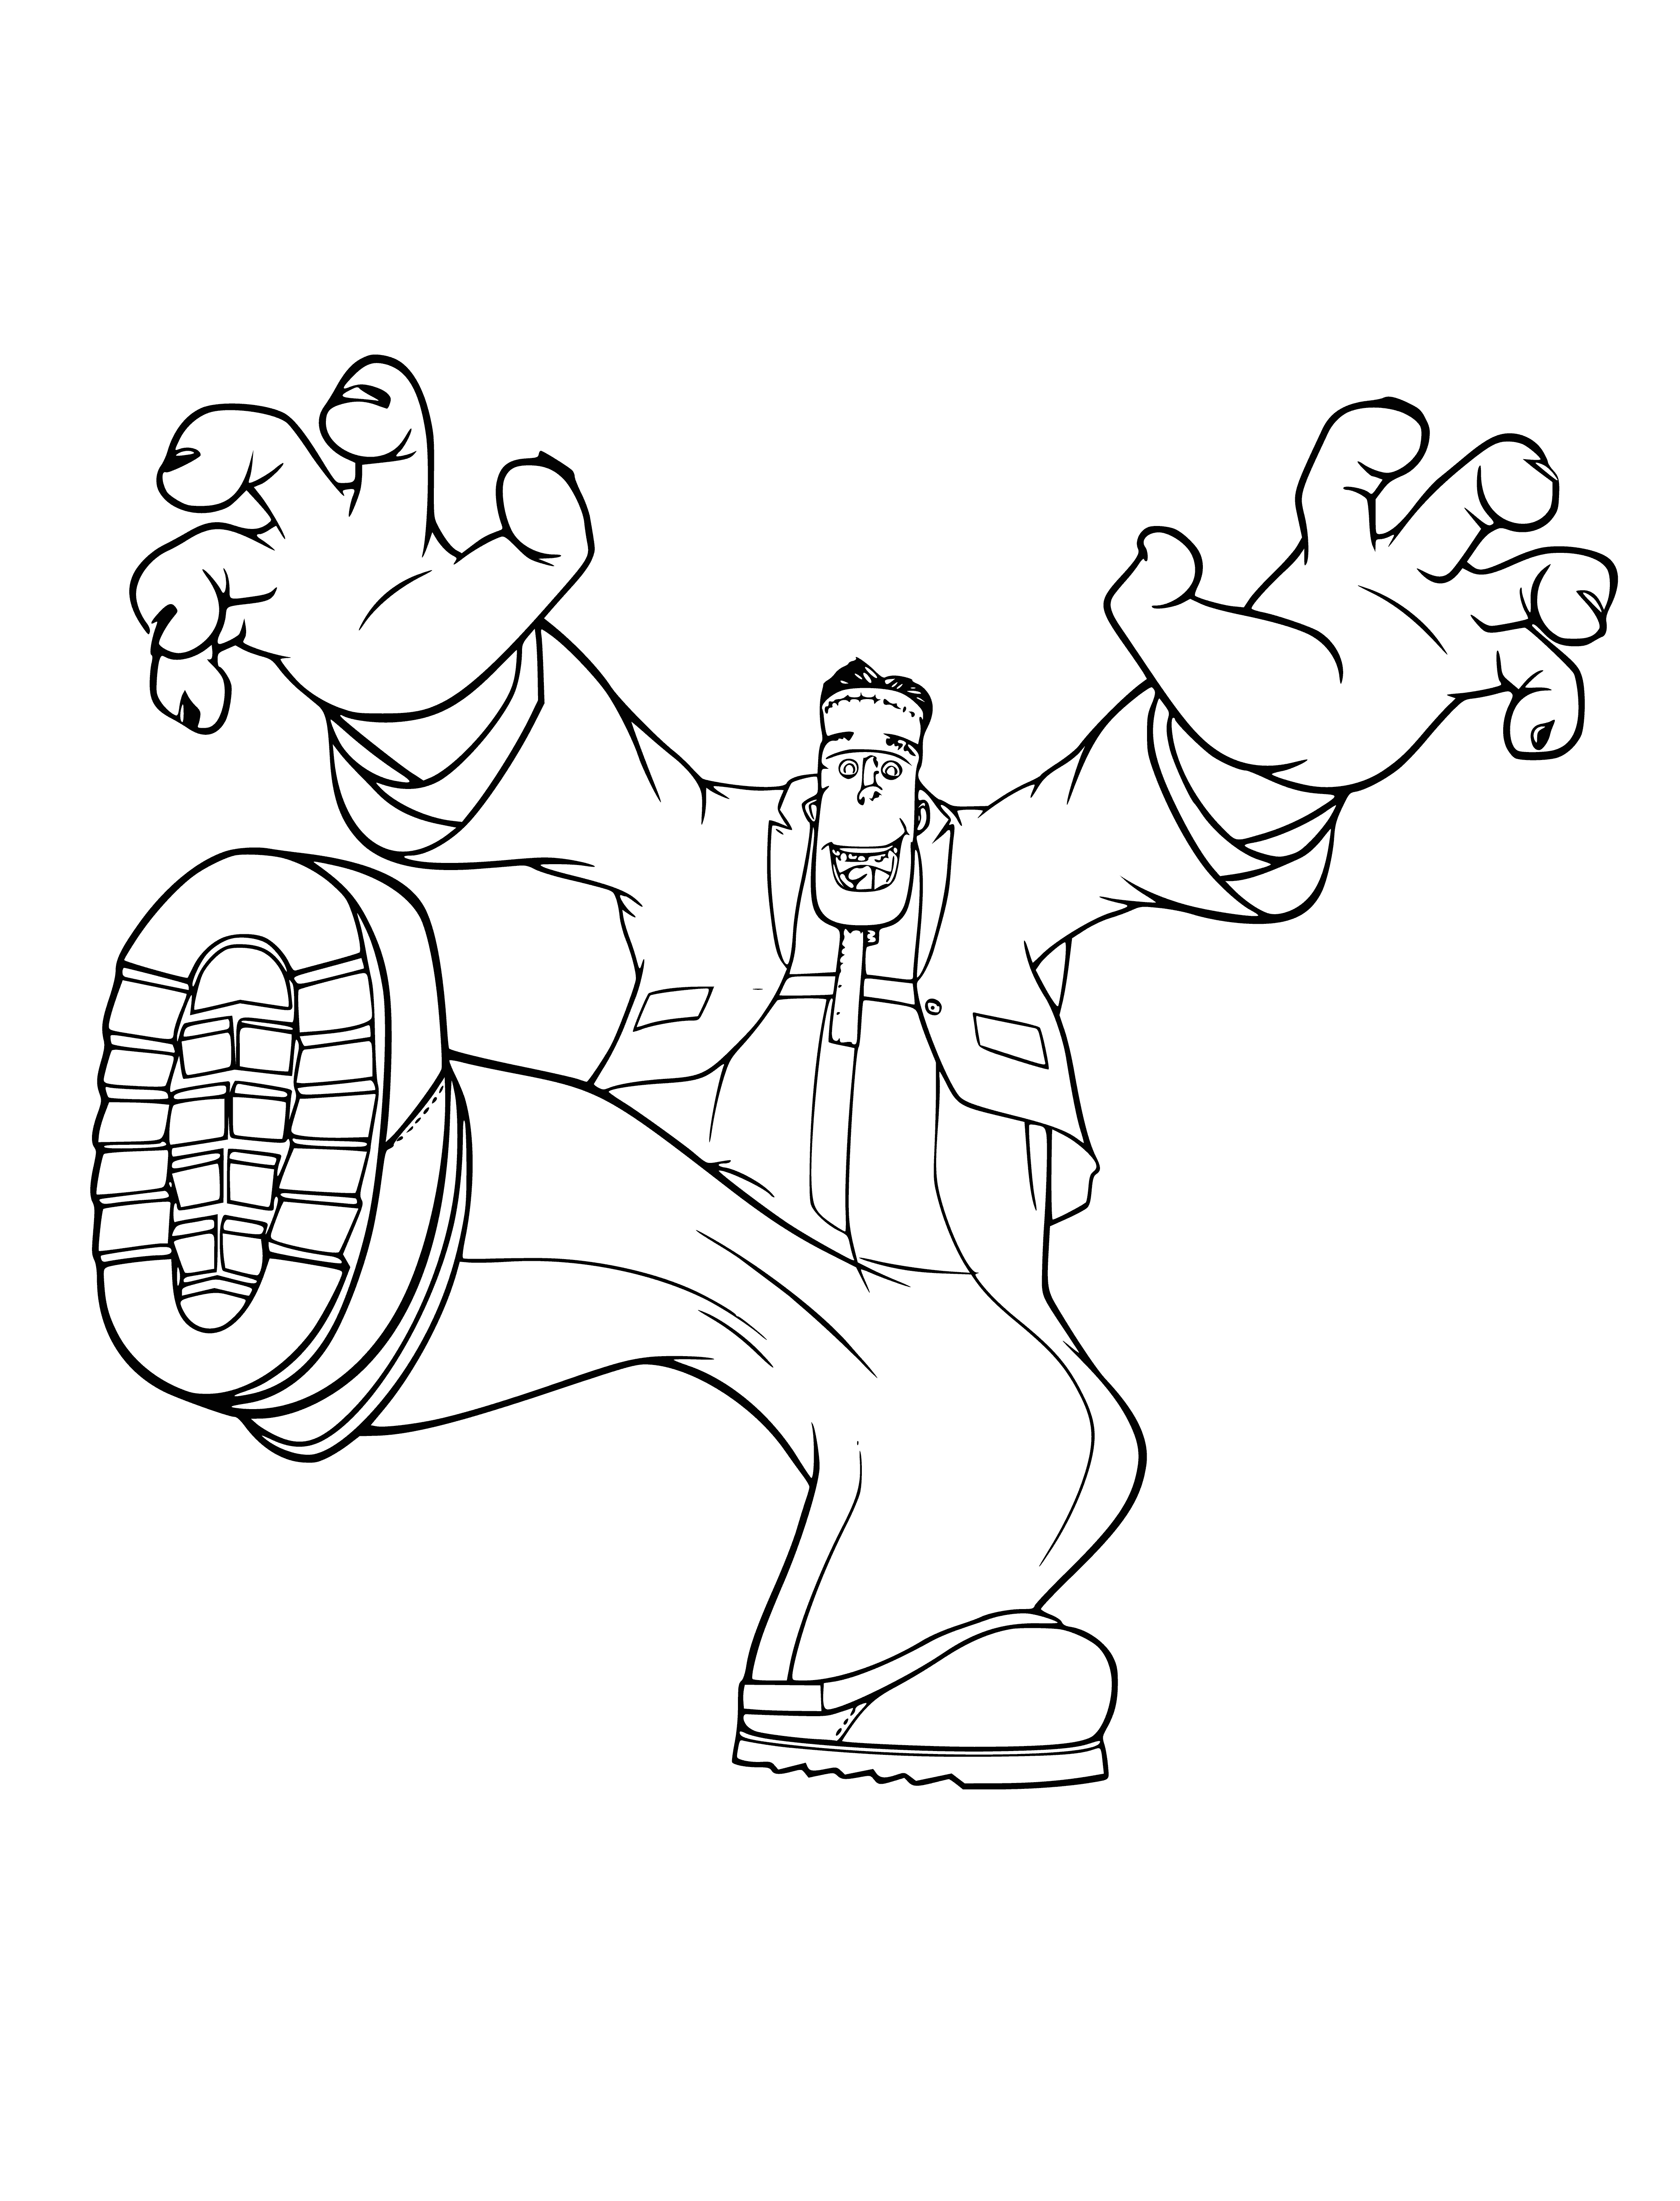 Monster frankenstein coloring page